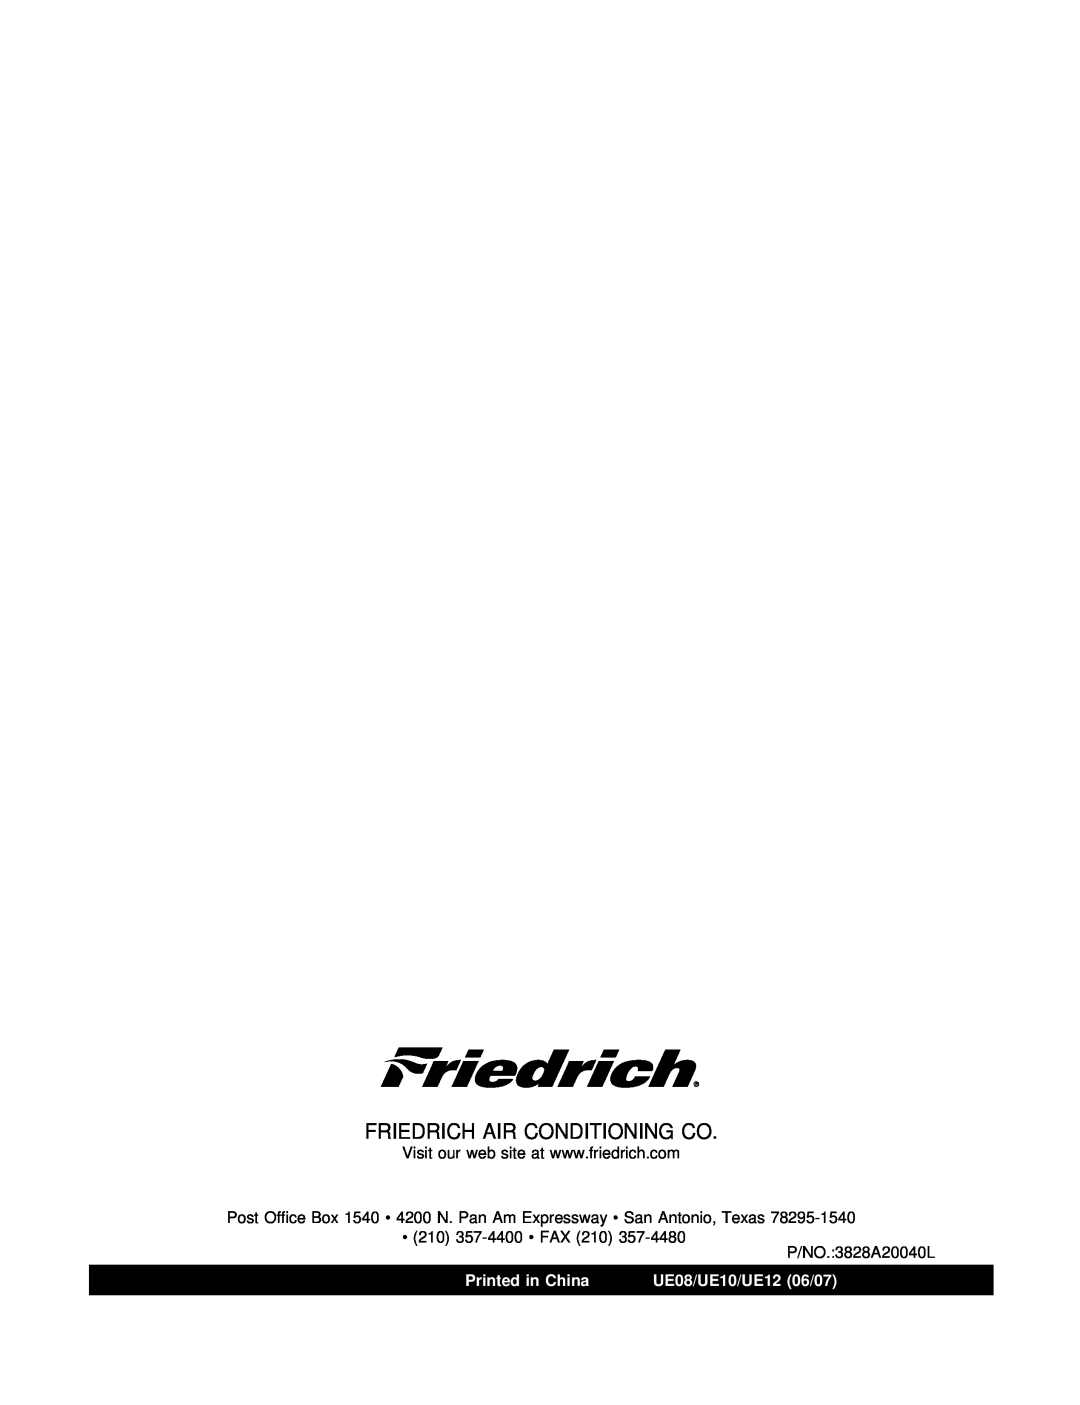 Friedrich manual Friedrich Air Conditioning Co, Printed in China, UE08/UE10/UE12 06/07 